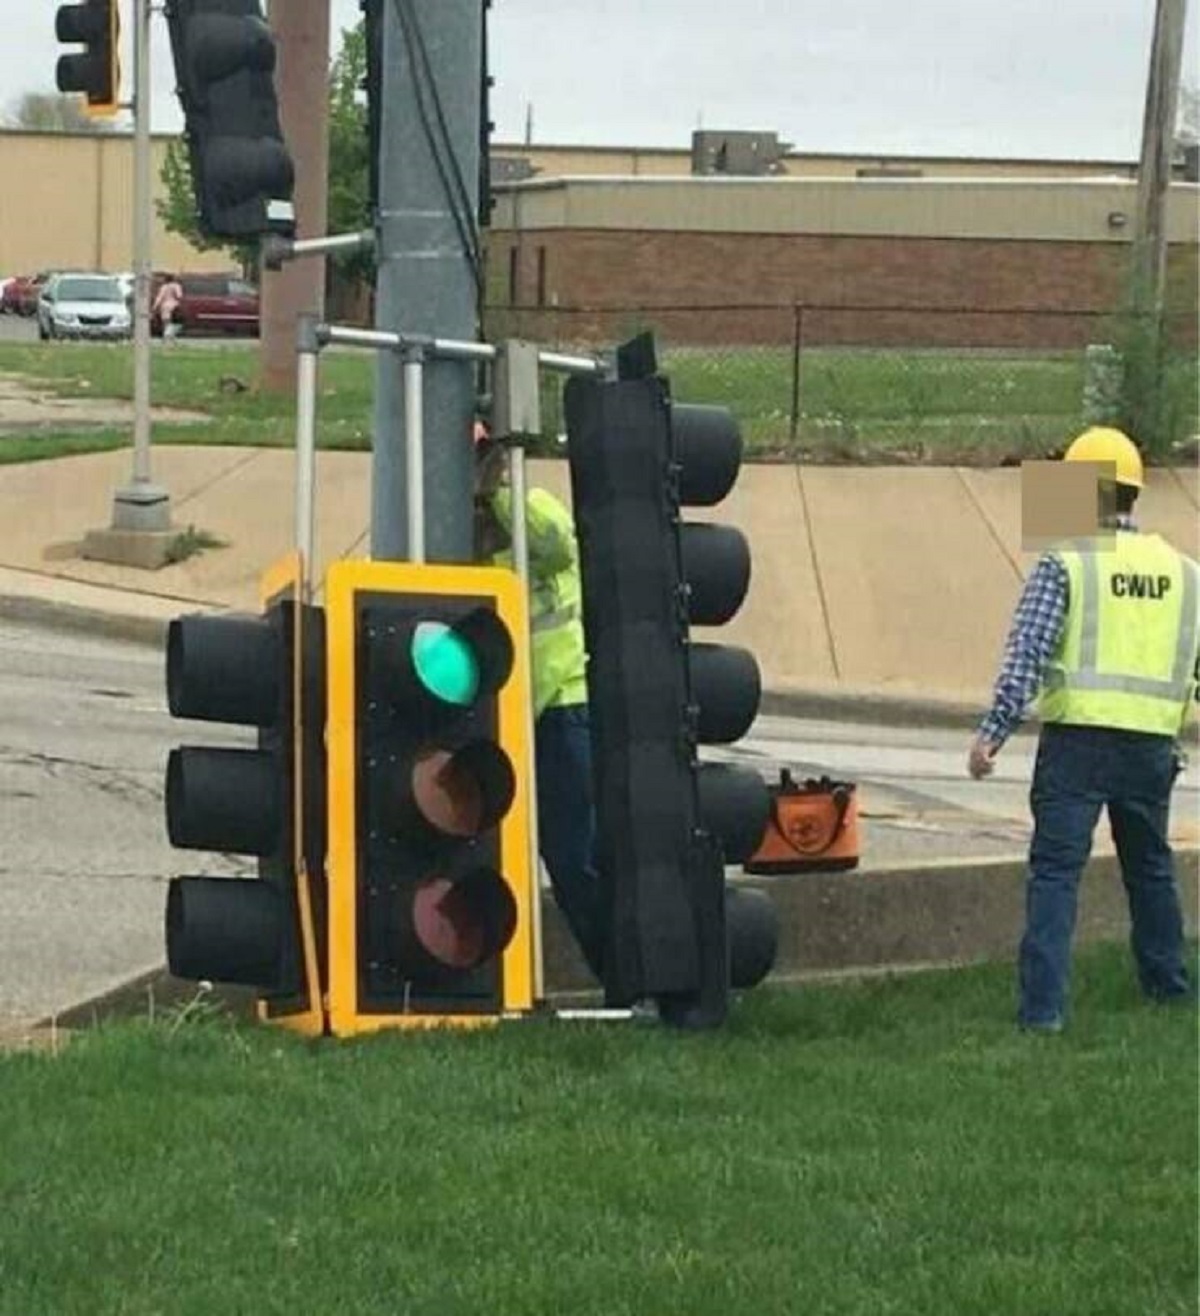 traffic light next to person - Cwlp